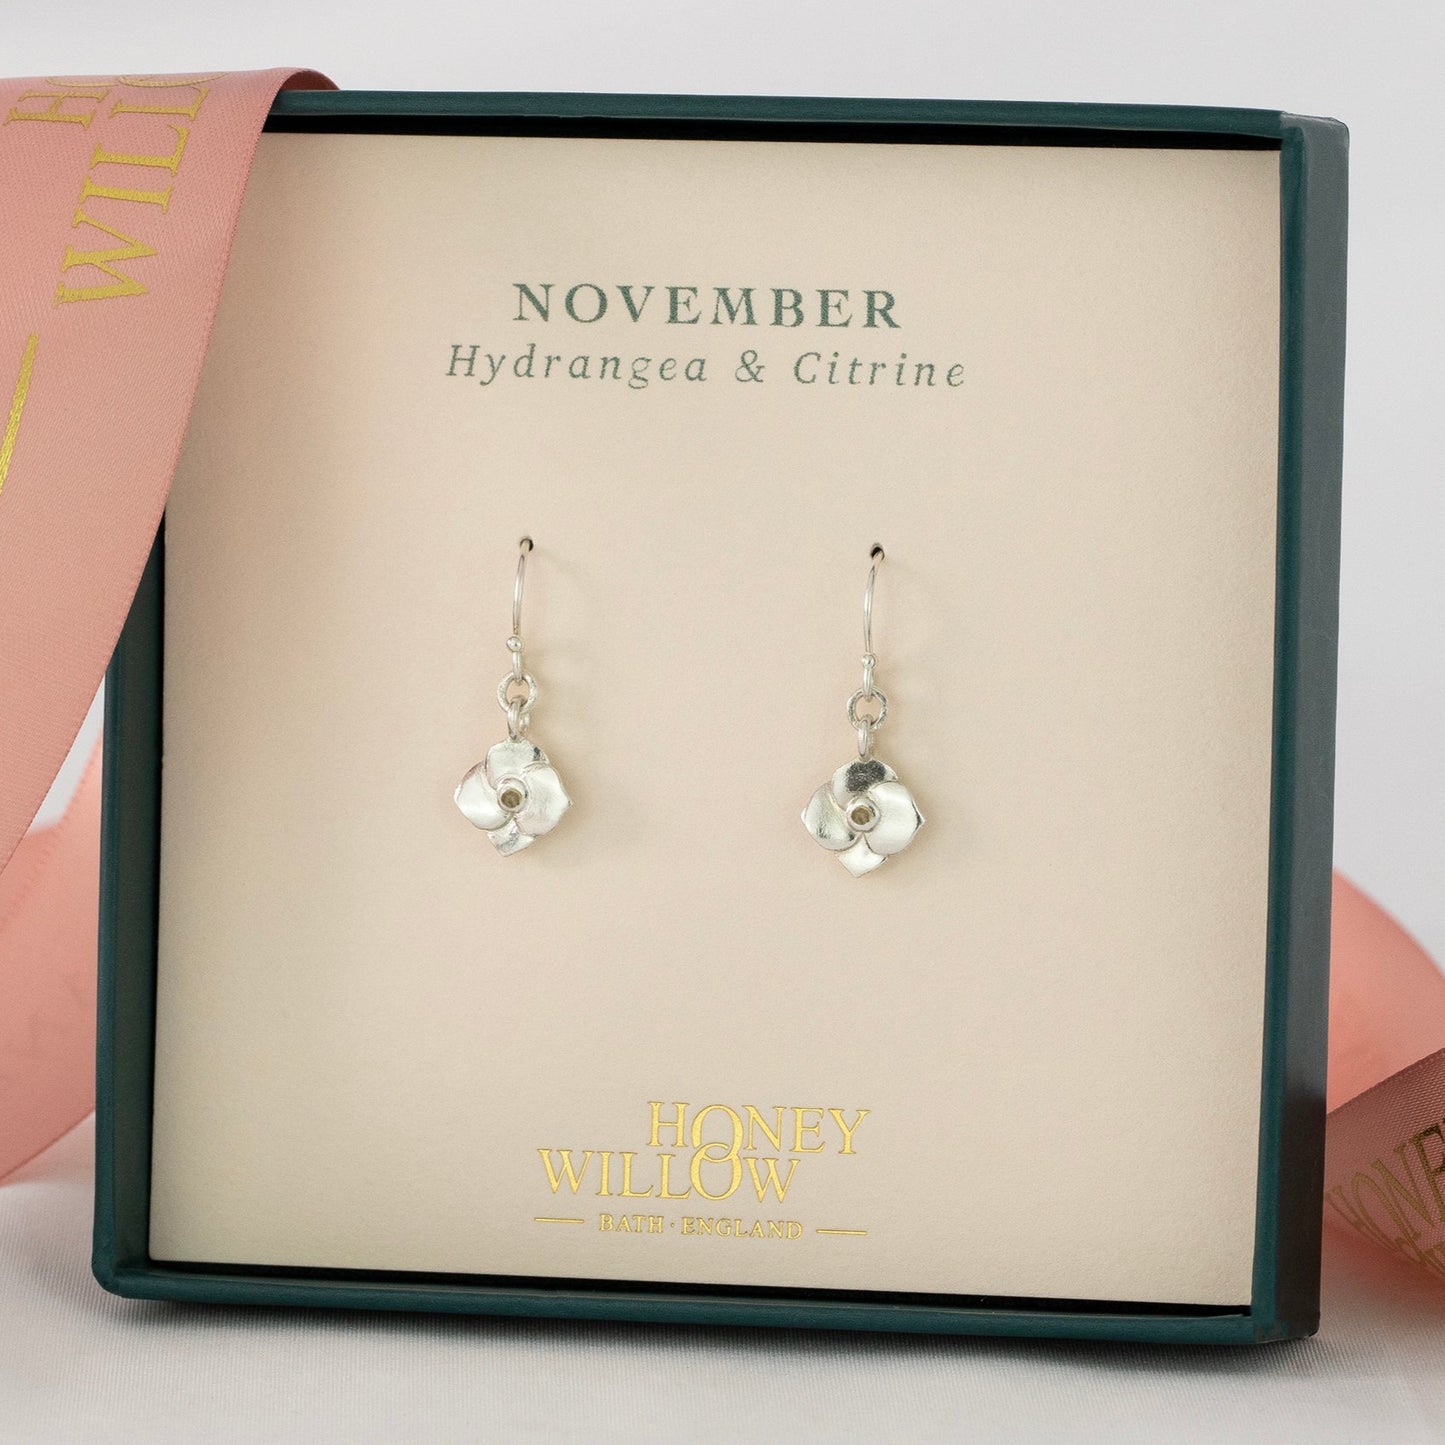 November Birth Flower & Birthstone Earrings - Hydrangea - Silver